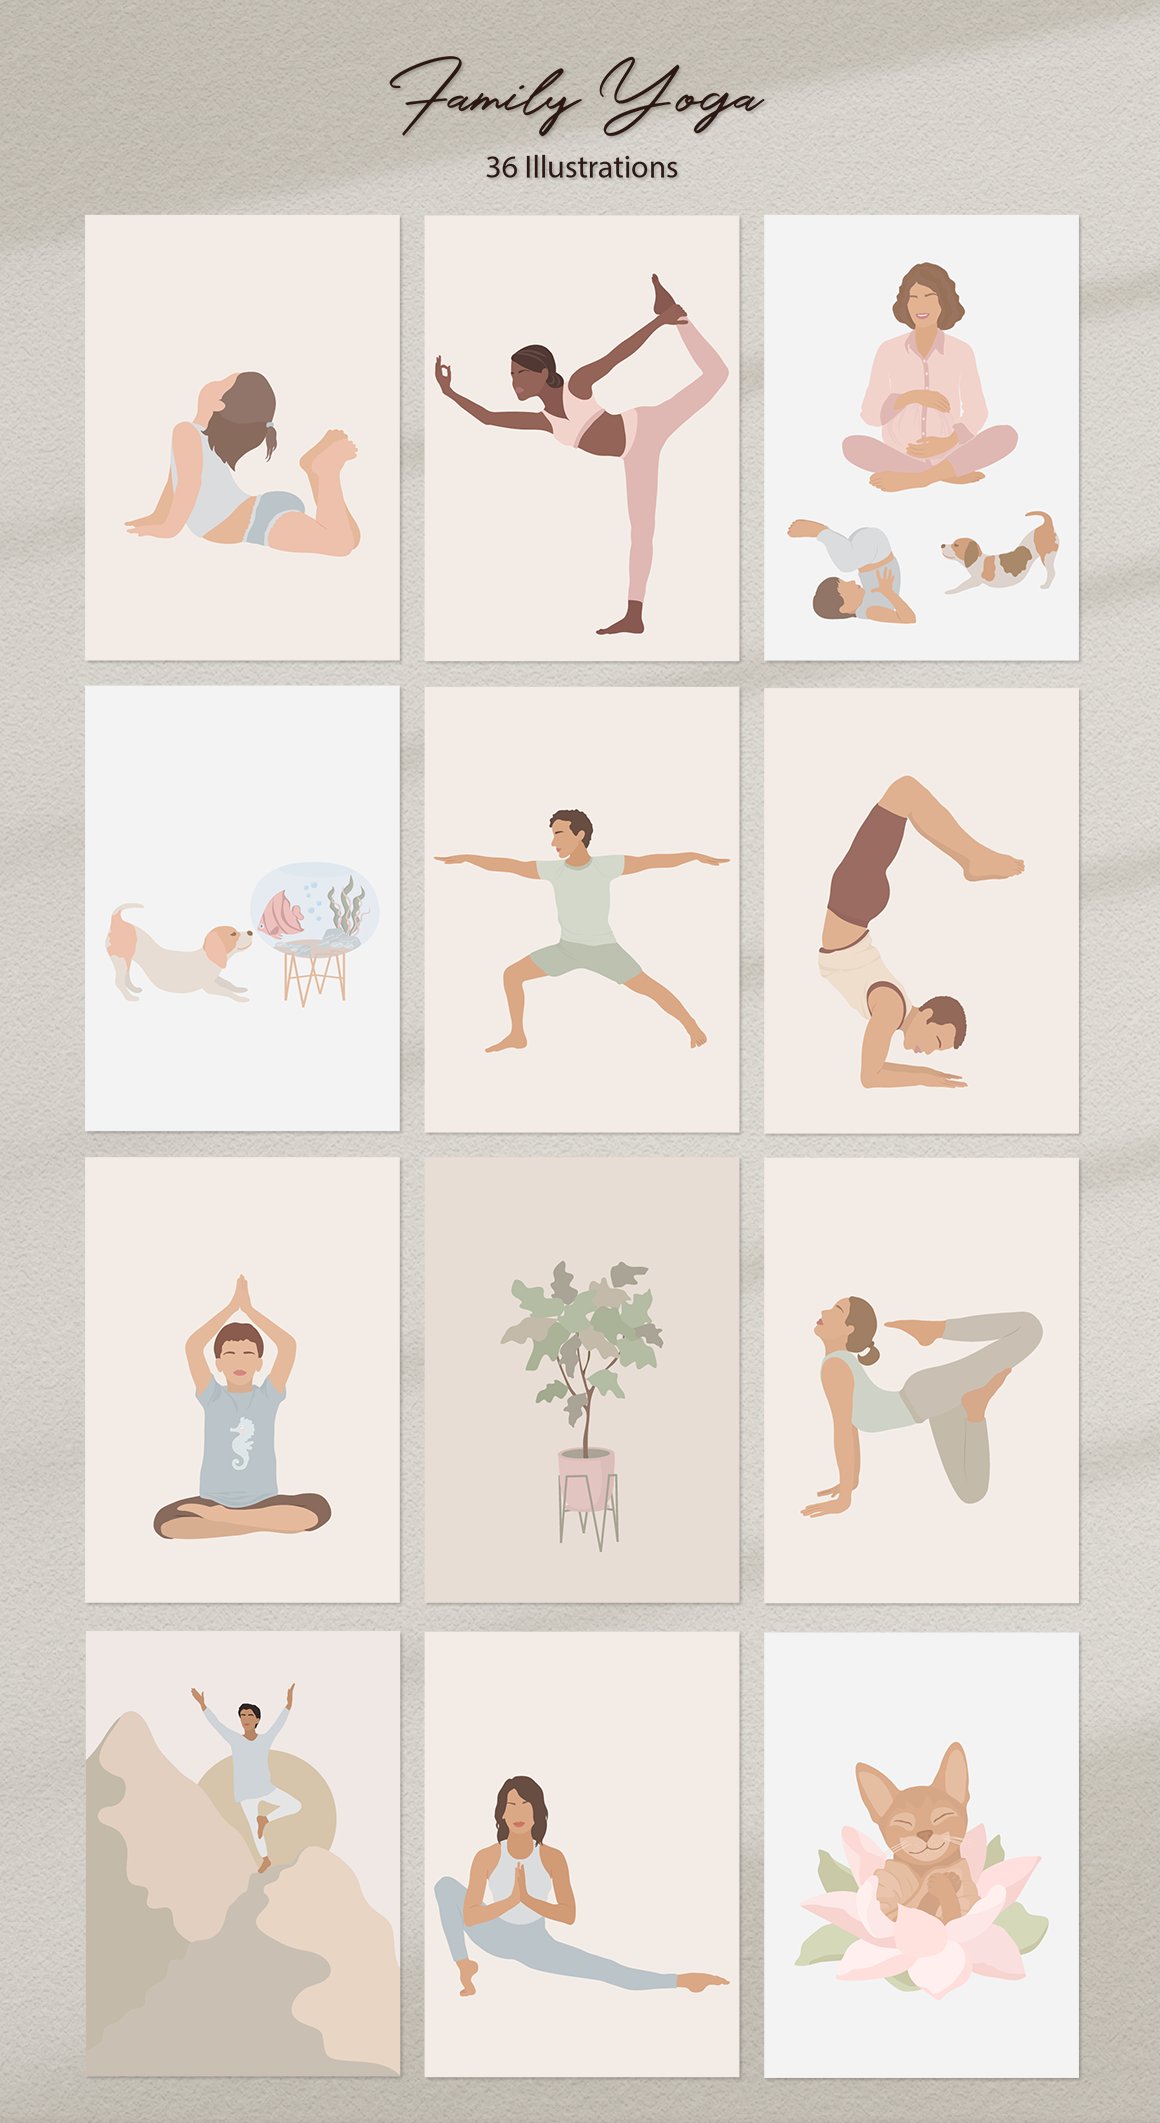 family yoga illustration set 28629 769